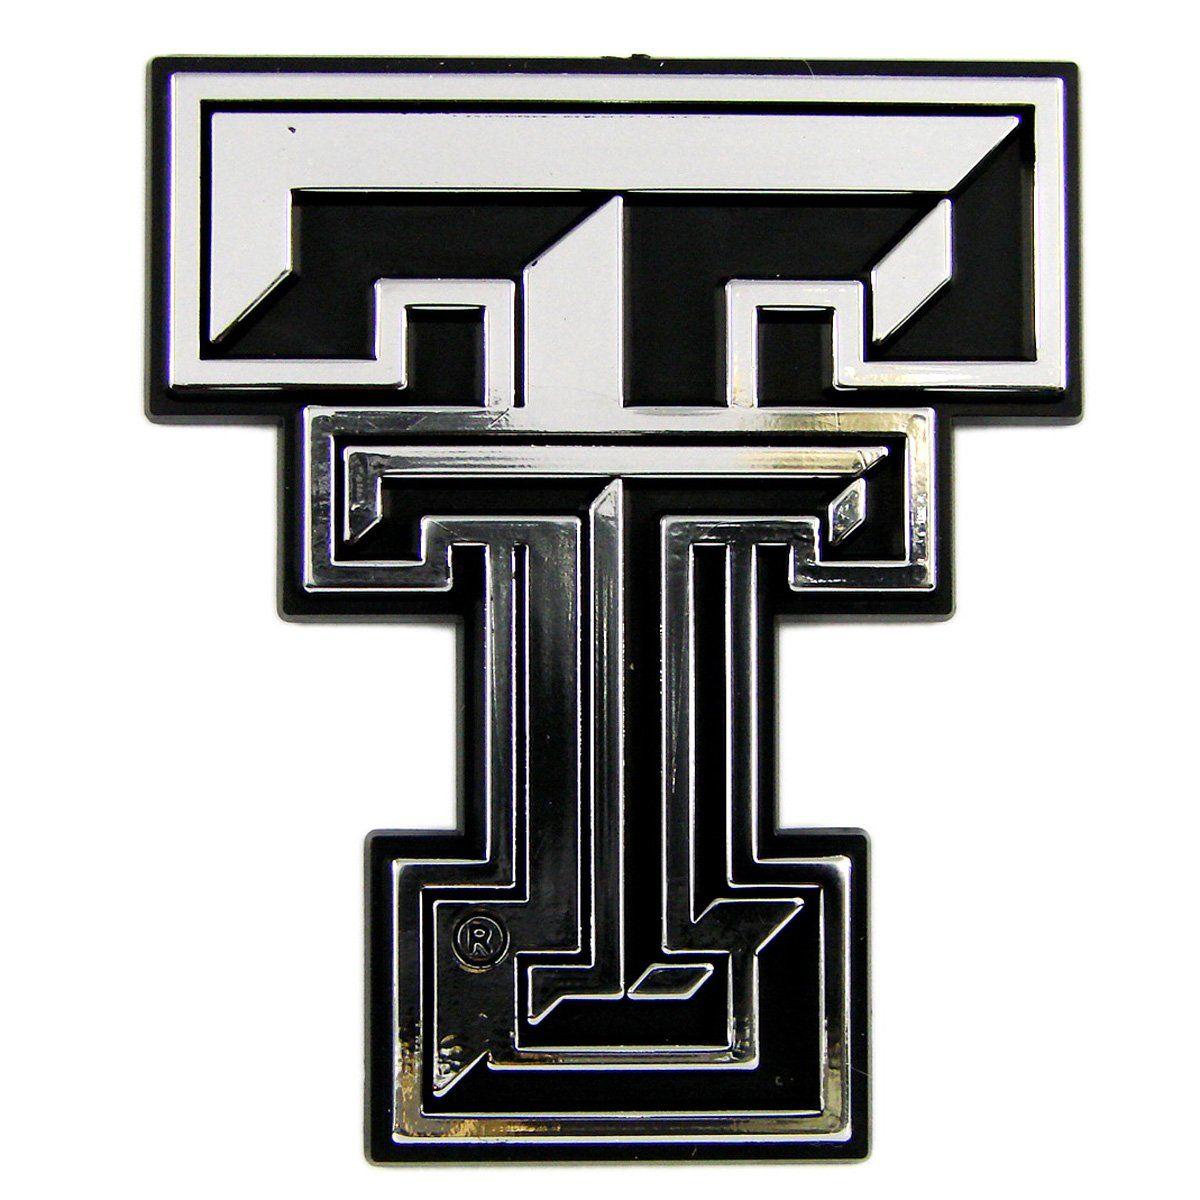 Texas Tech Red Raiders Logo - Amazon.com: Texas Tech Red Raiders Classic Car Emblem (Silver ...